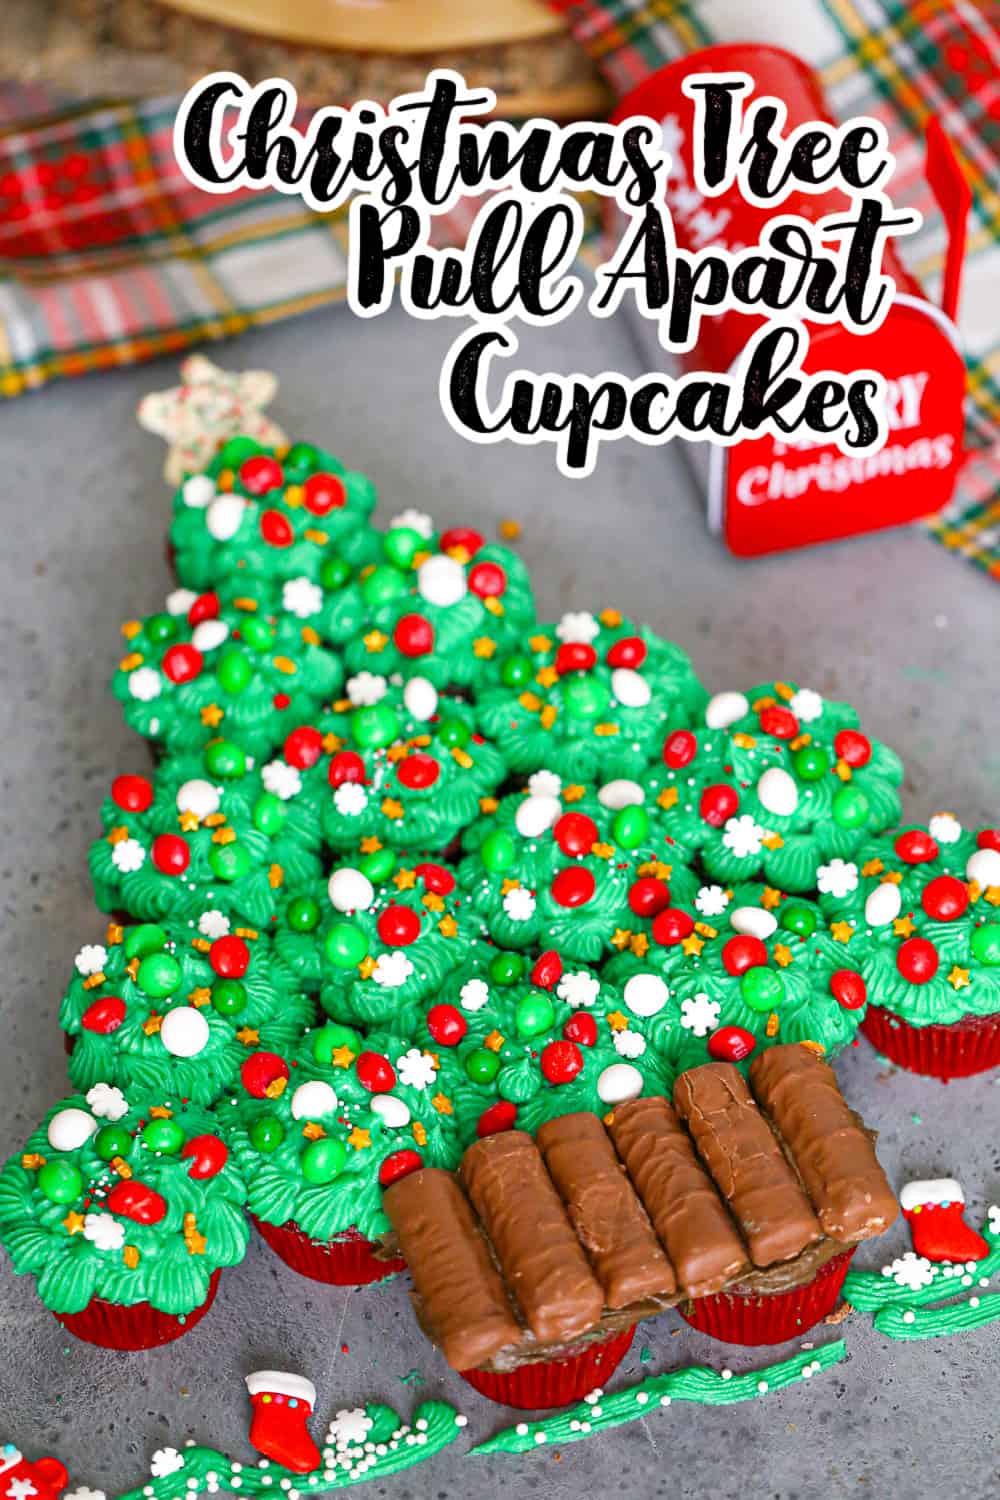 Christmas Tree Pull Apart Cupcakes Cake recipe party dessert